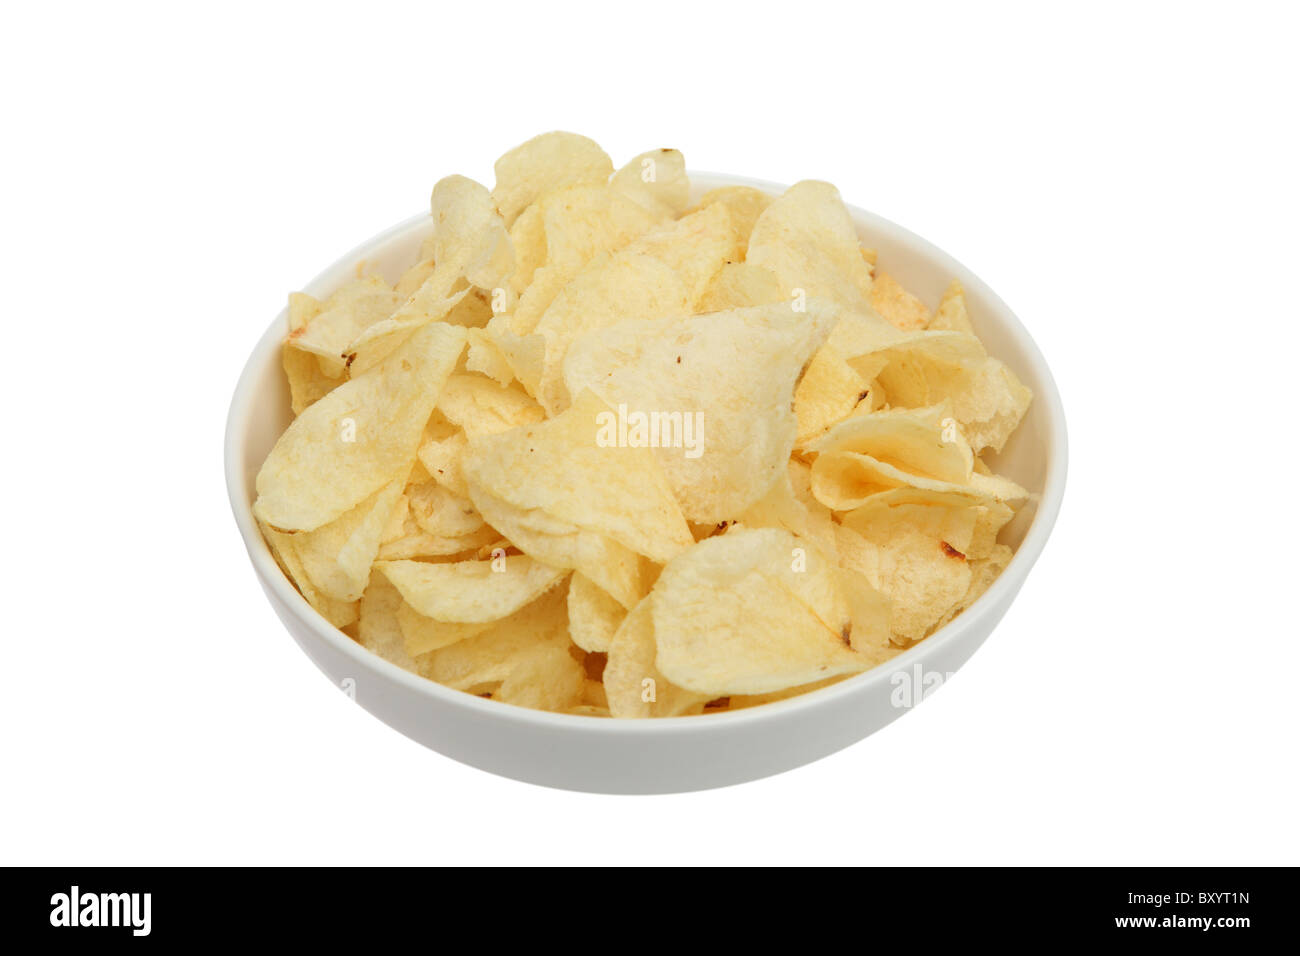 Potato chips in bowl on white background Stock Photo